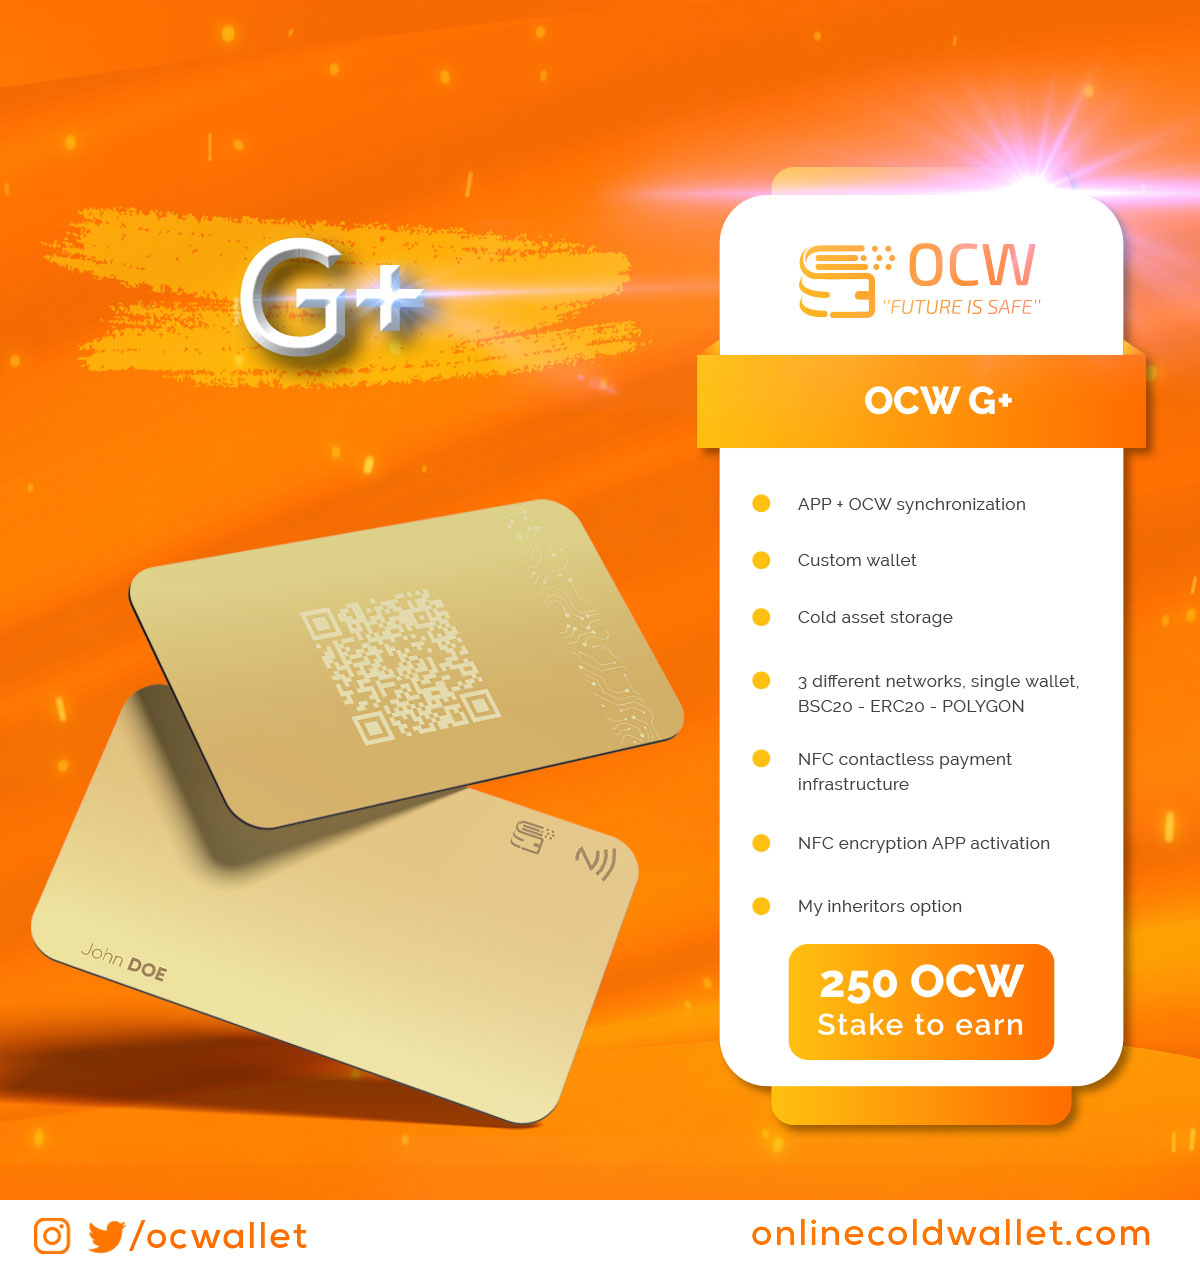 Online Cold Wallet Cards